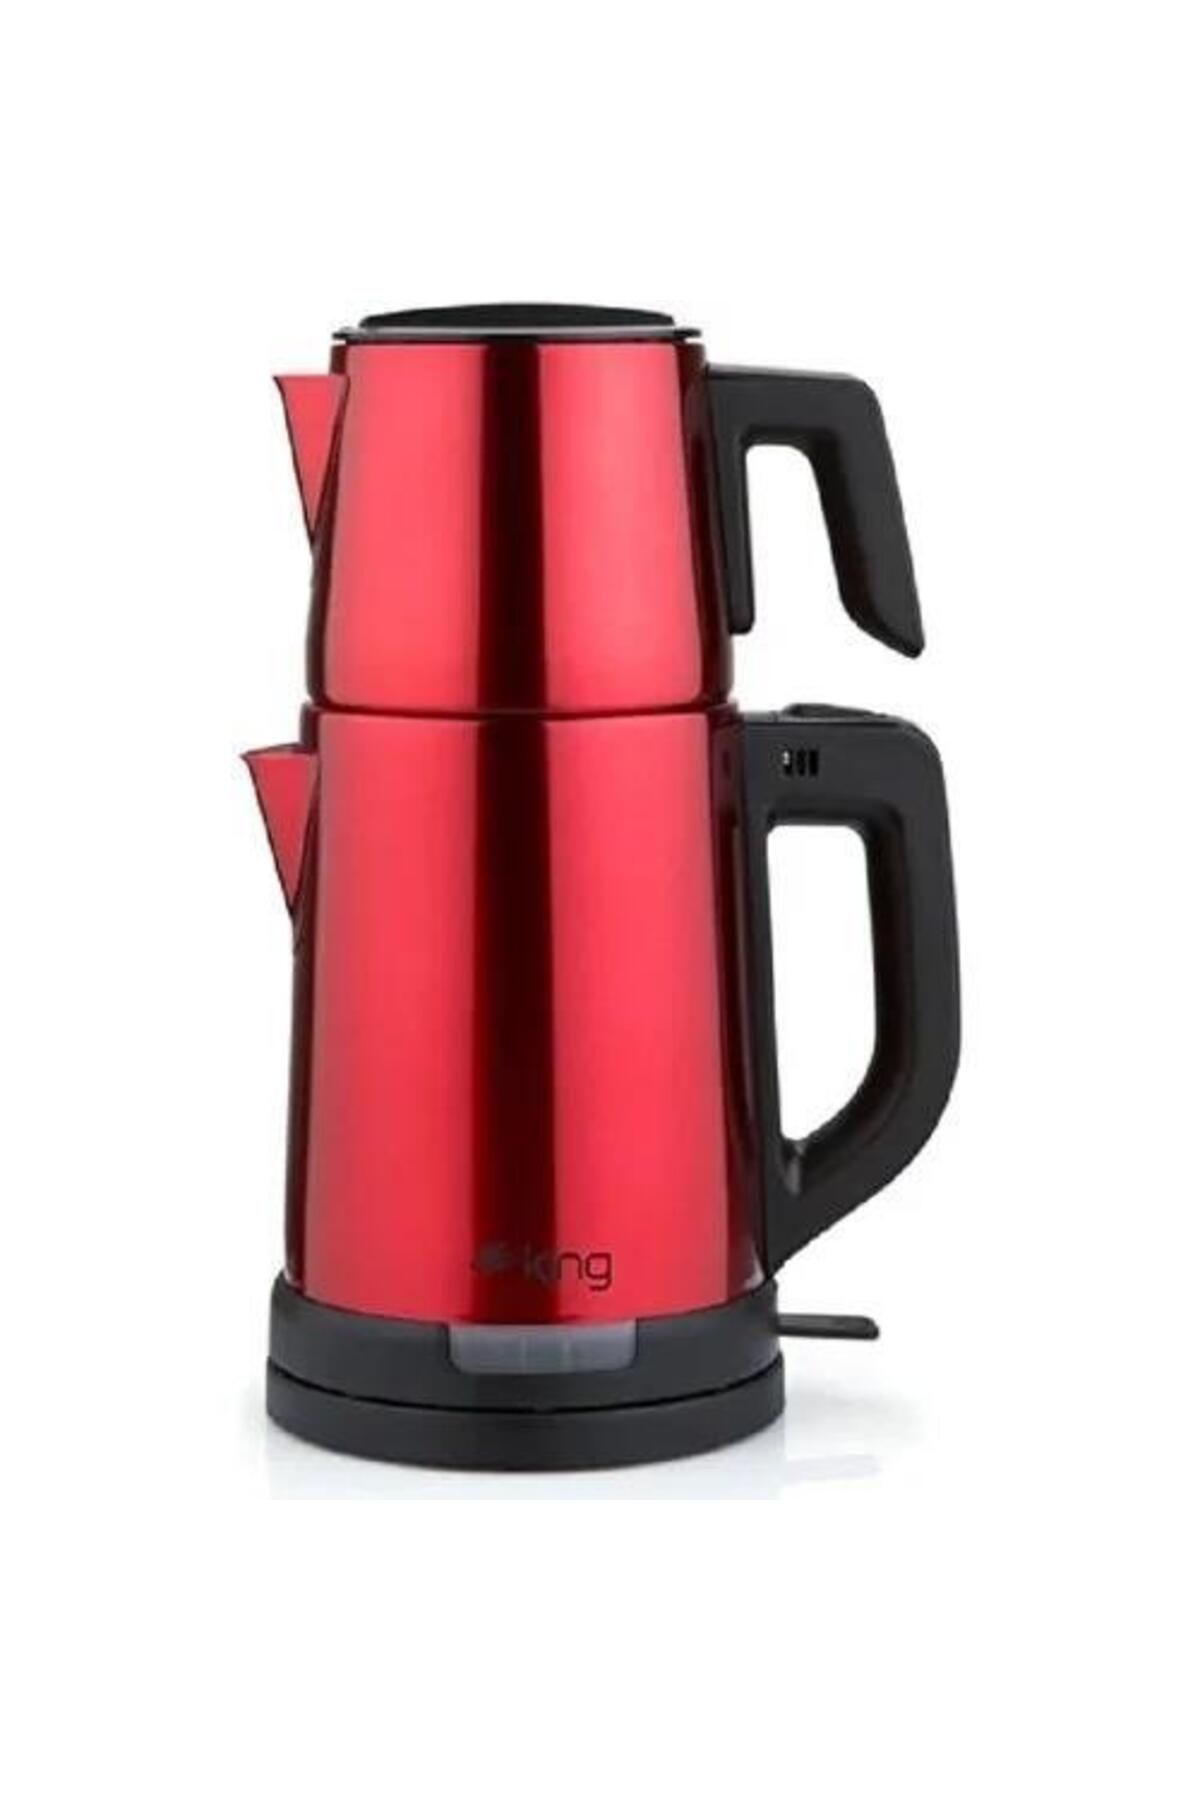 King Kcm331 Tea Pro Inox Çay Makinesi Kırmızı